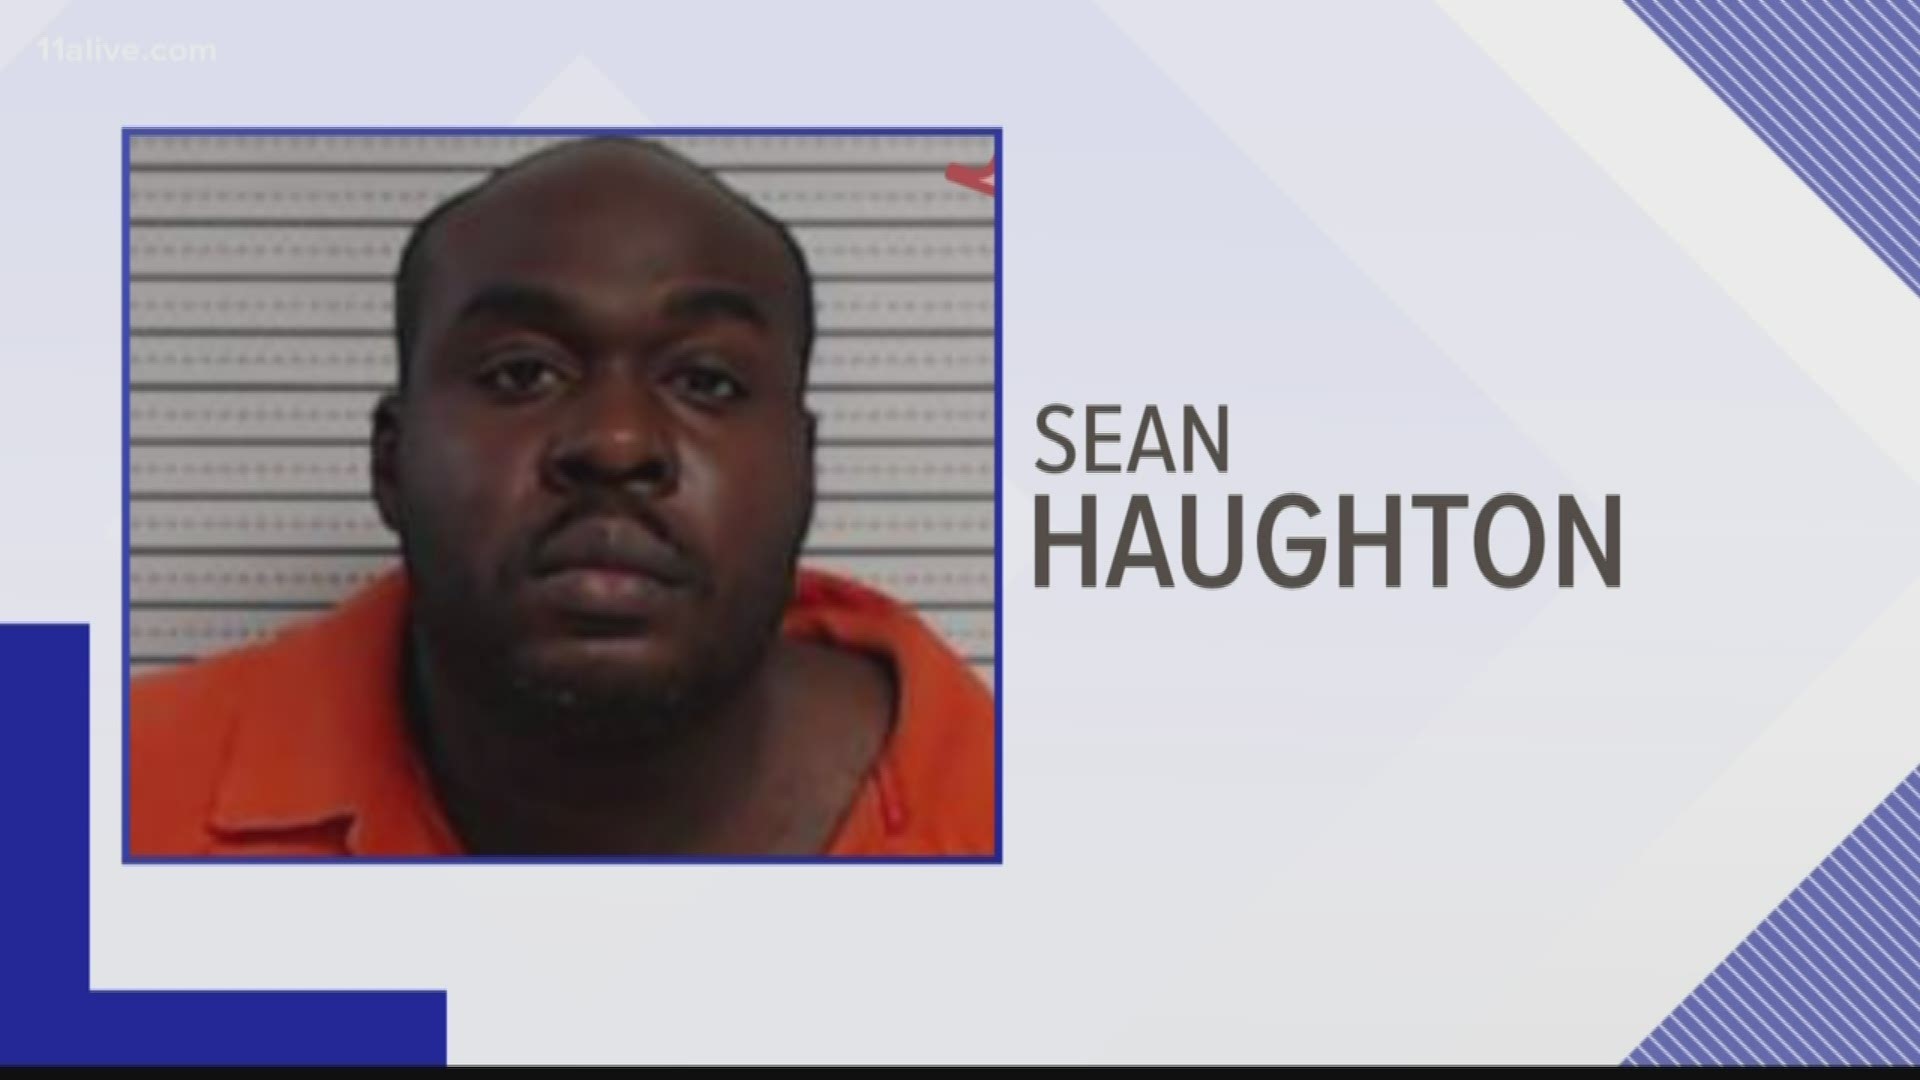 Haughton was taken into custody